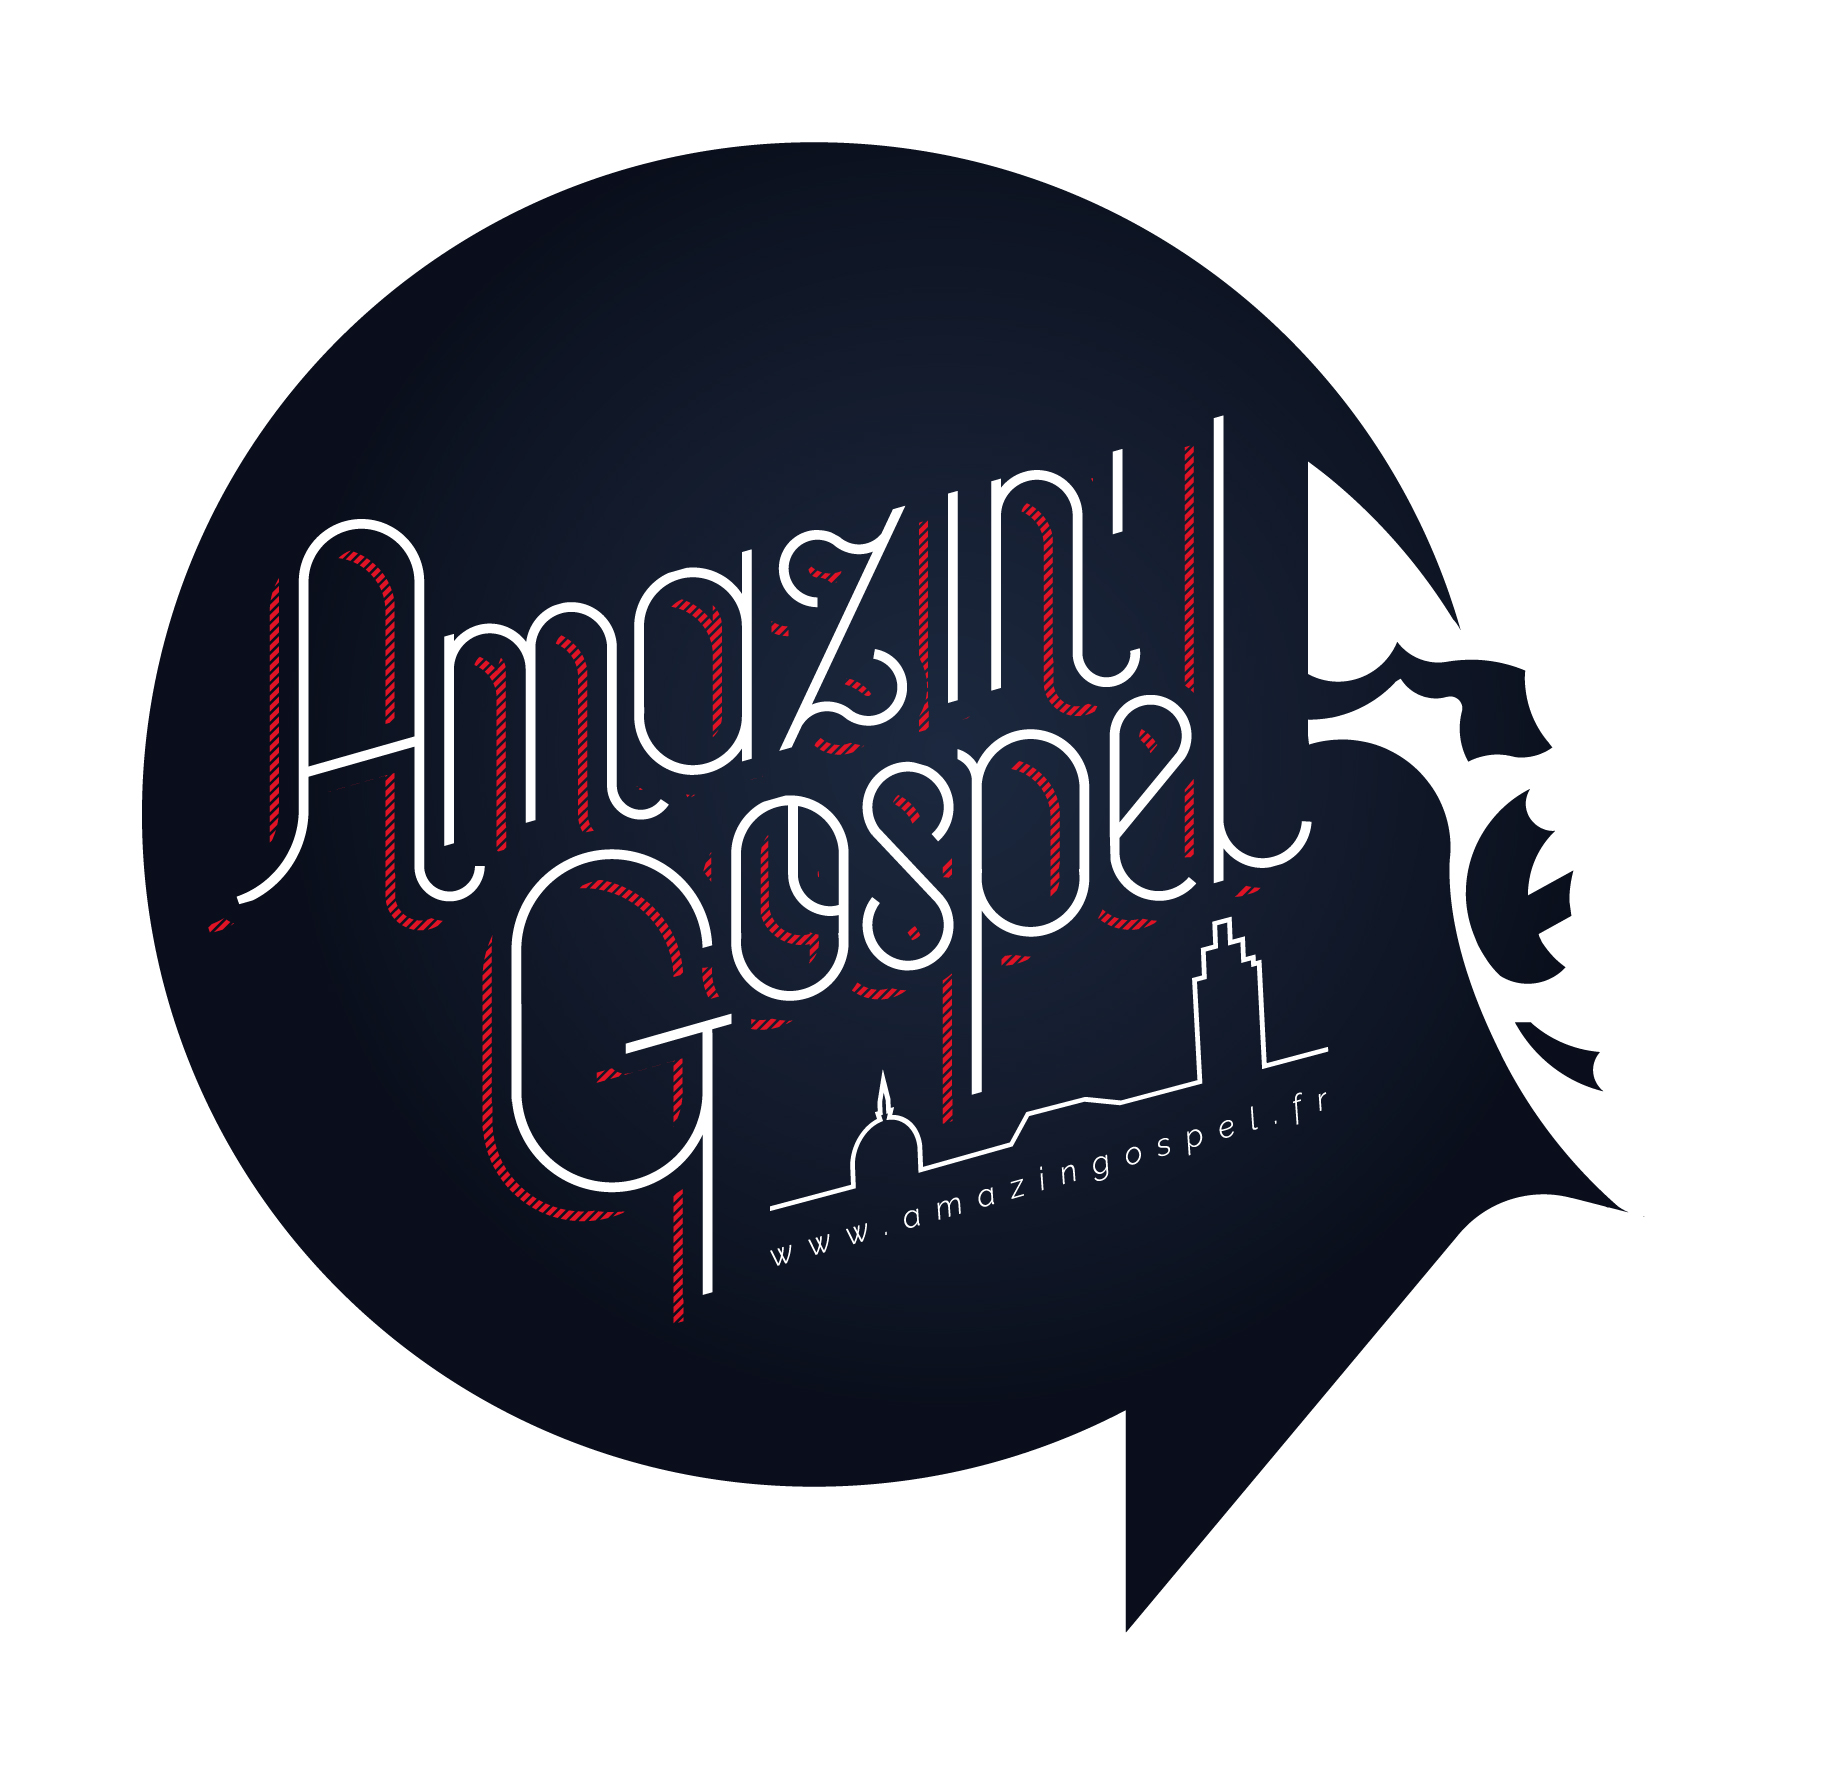 Amazin'Gospel